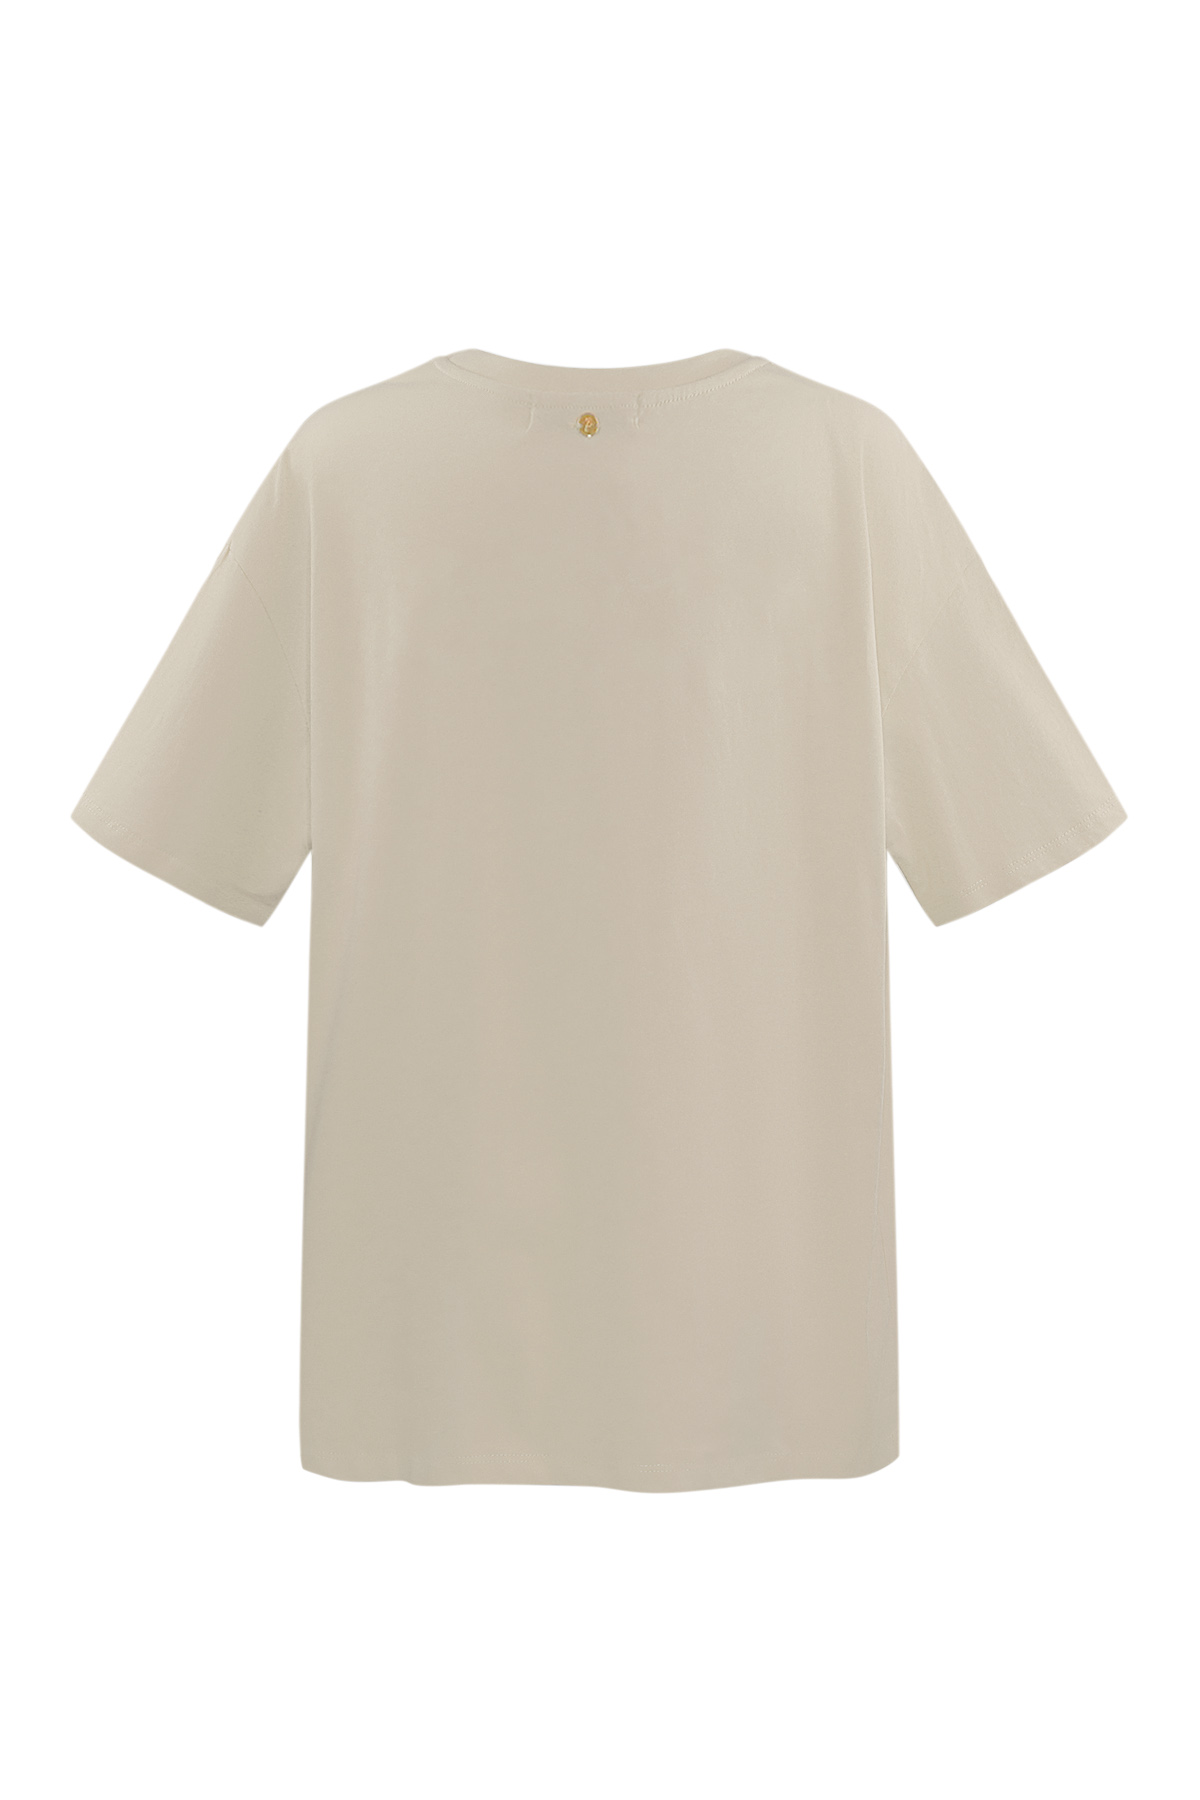 T-shirt ma perle - beige h5 Image7